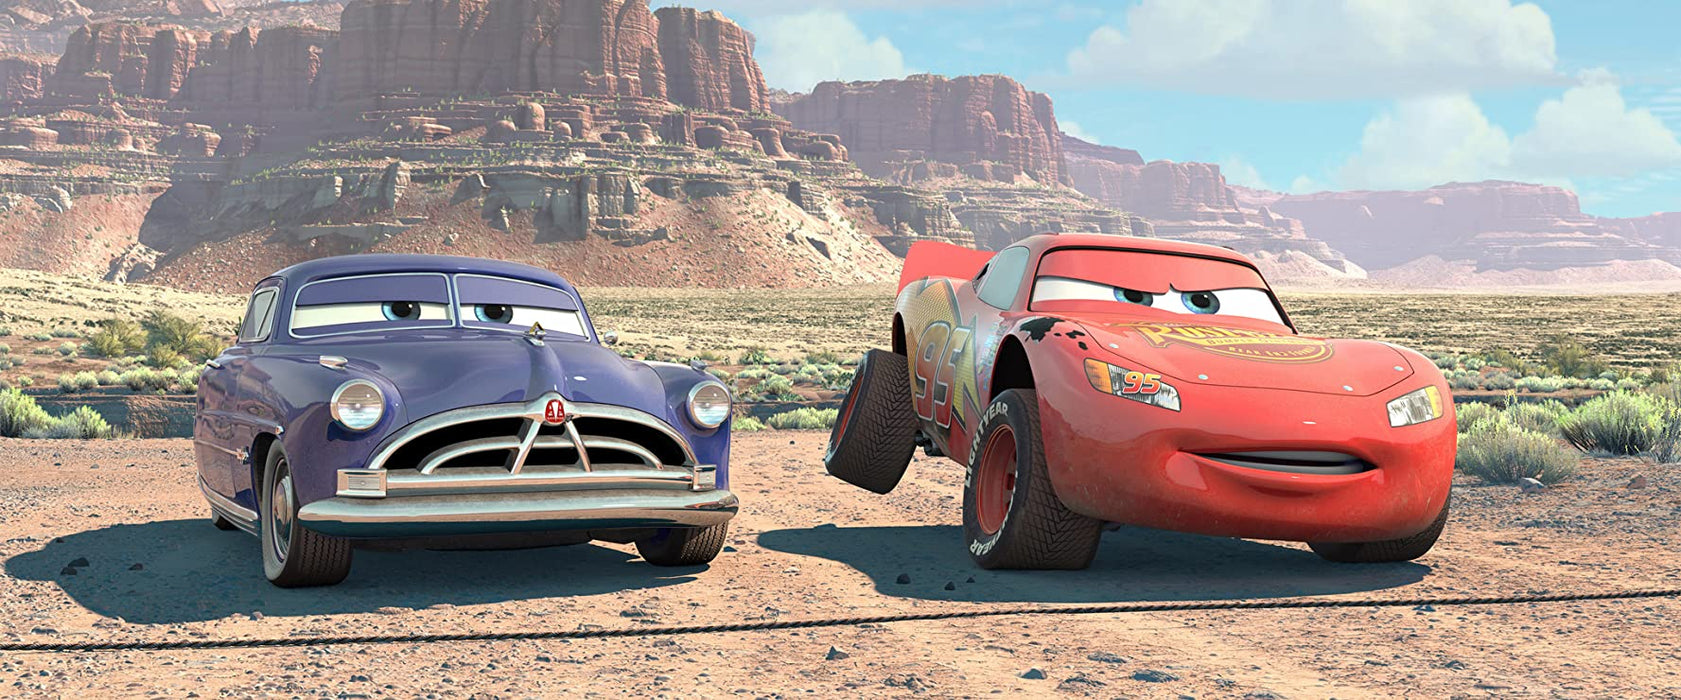 Disney Pixar's Cars - Limited Edition SteelBook [3D + 2D Blu-ray]